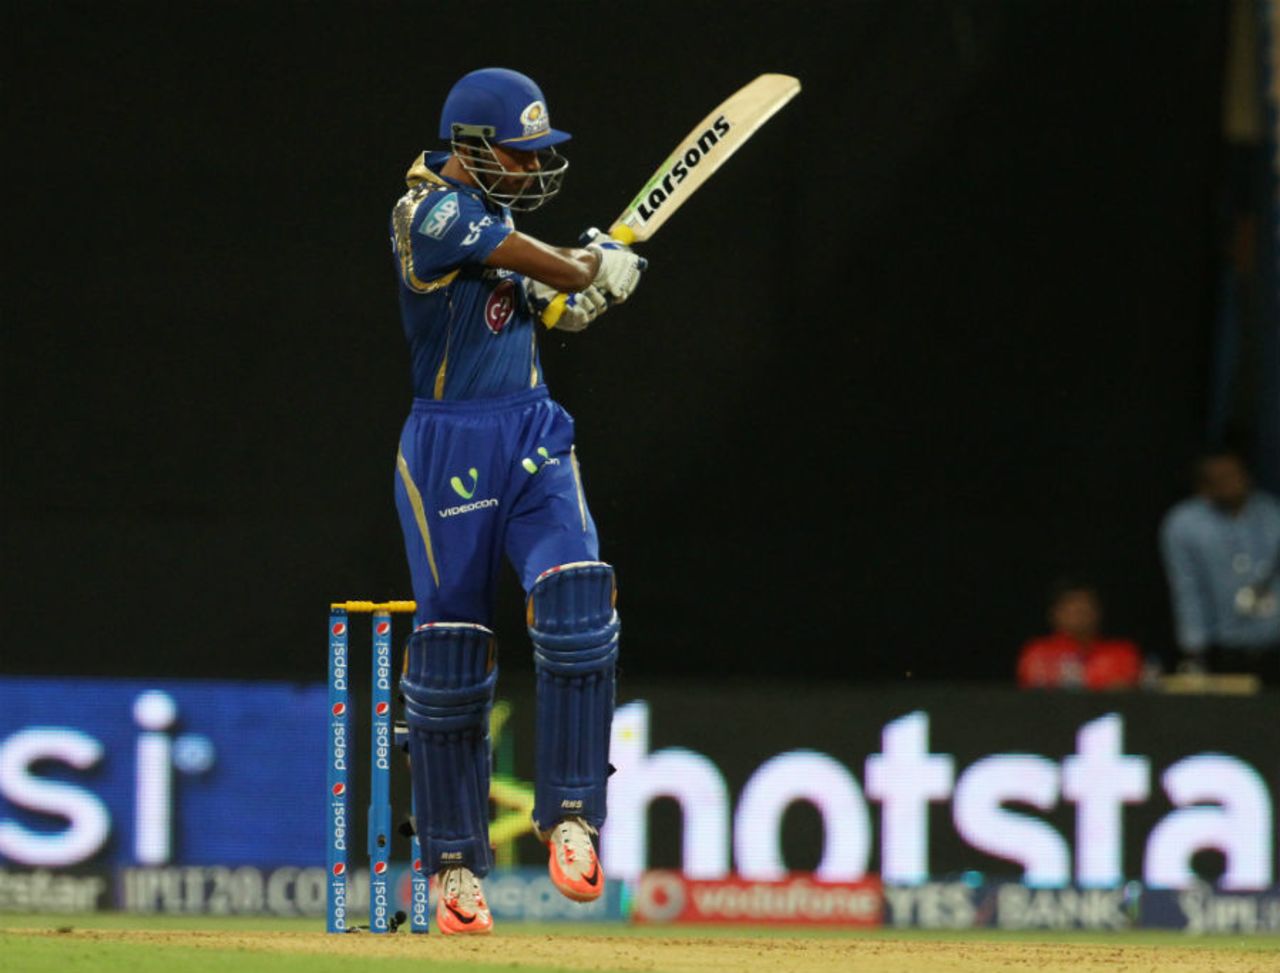 Hardik Pandya swipes for four, Mumbai Indians v Kolkata Knight Riders, IPL 2015, Mumbai, May 14, 2015